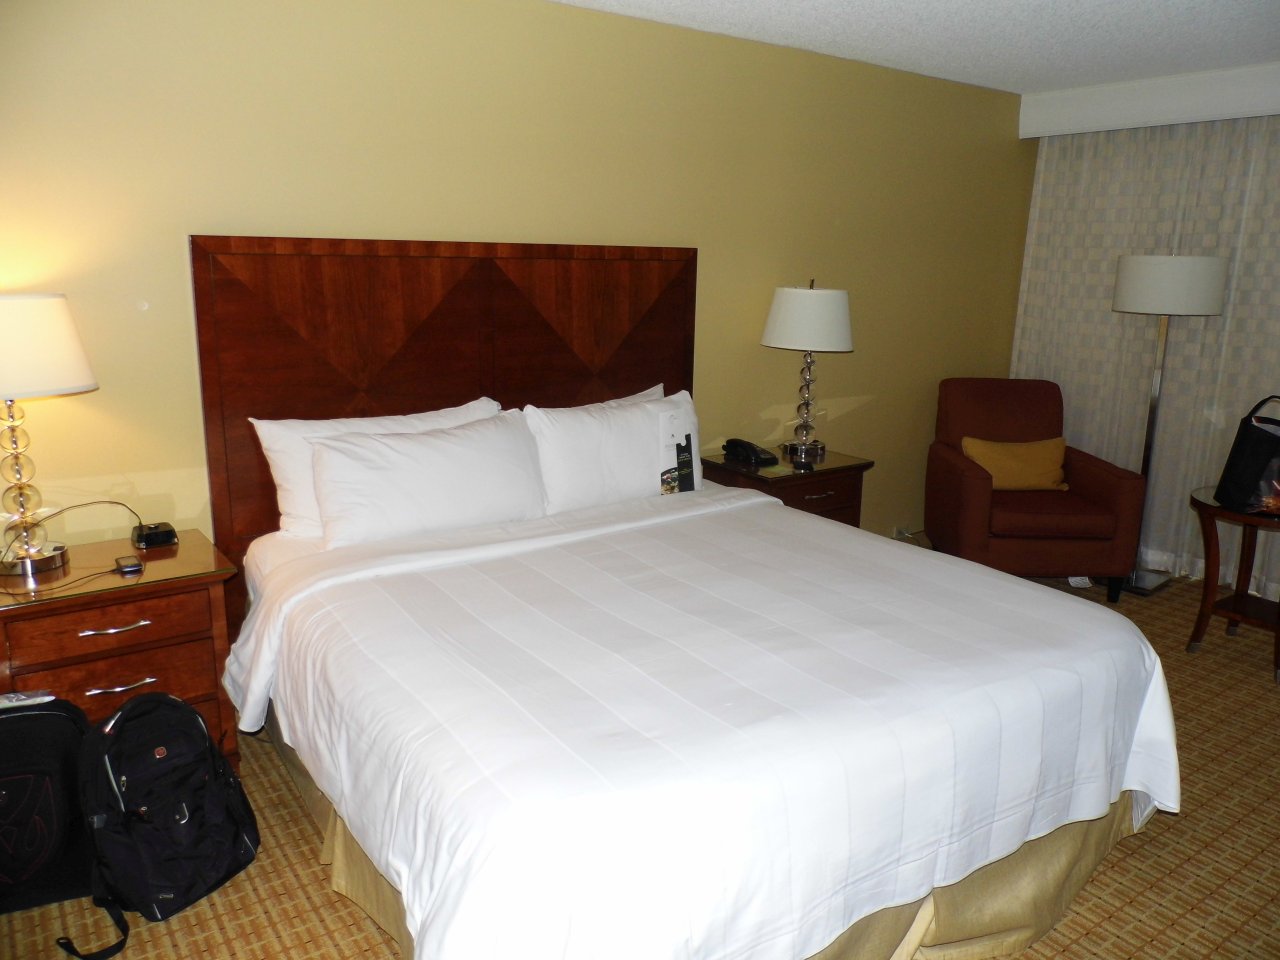 blog/cfd3-hotel-room.jpg